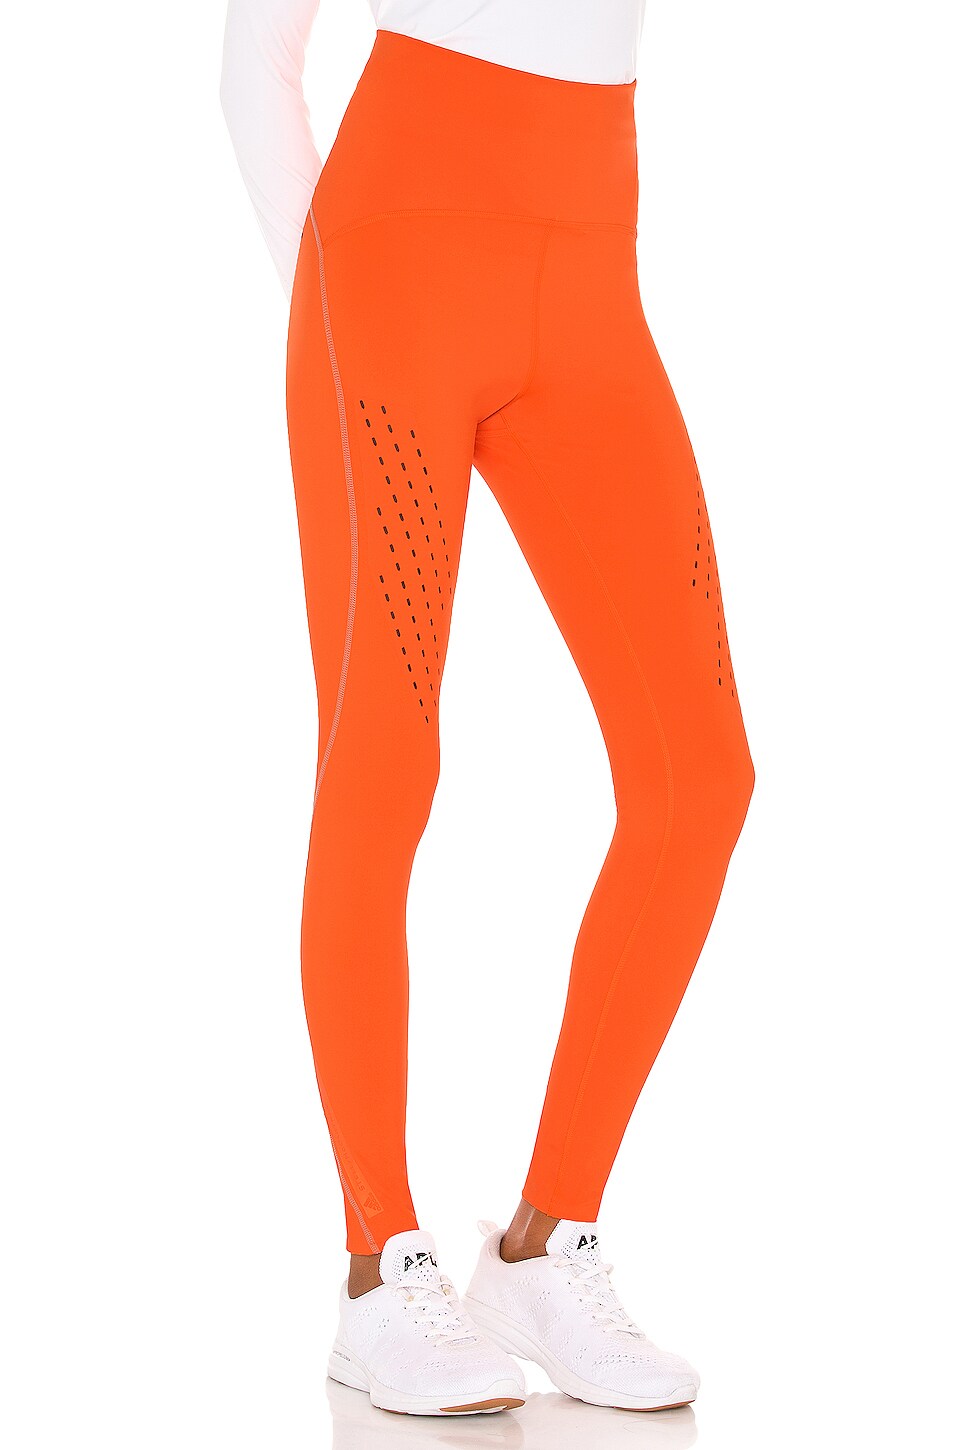 adidas by Stella McCartney Truepur Tight in App Signal Orange | REVOLVE